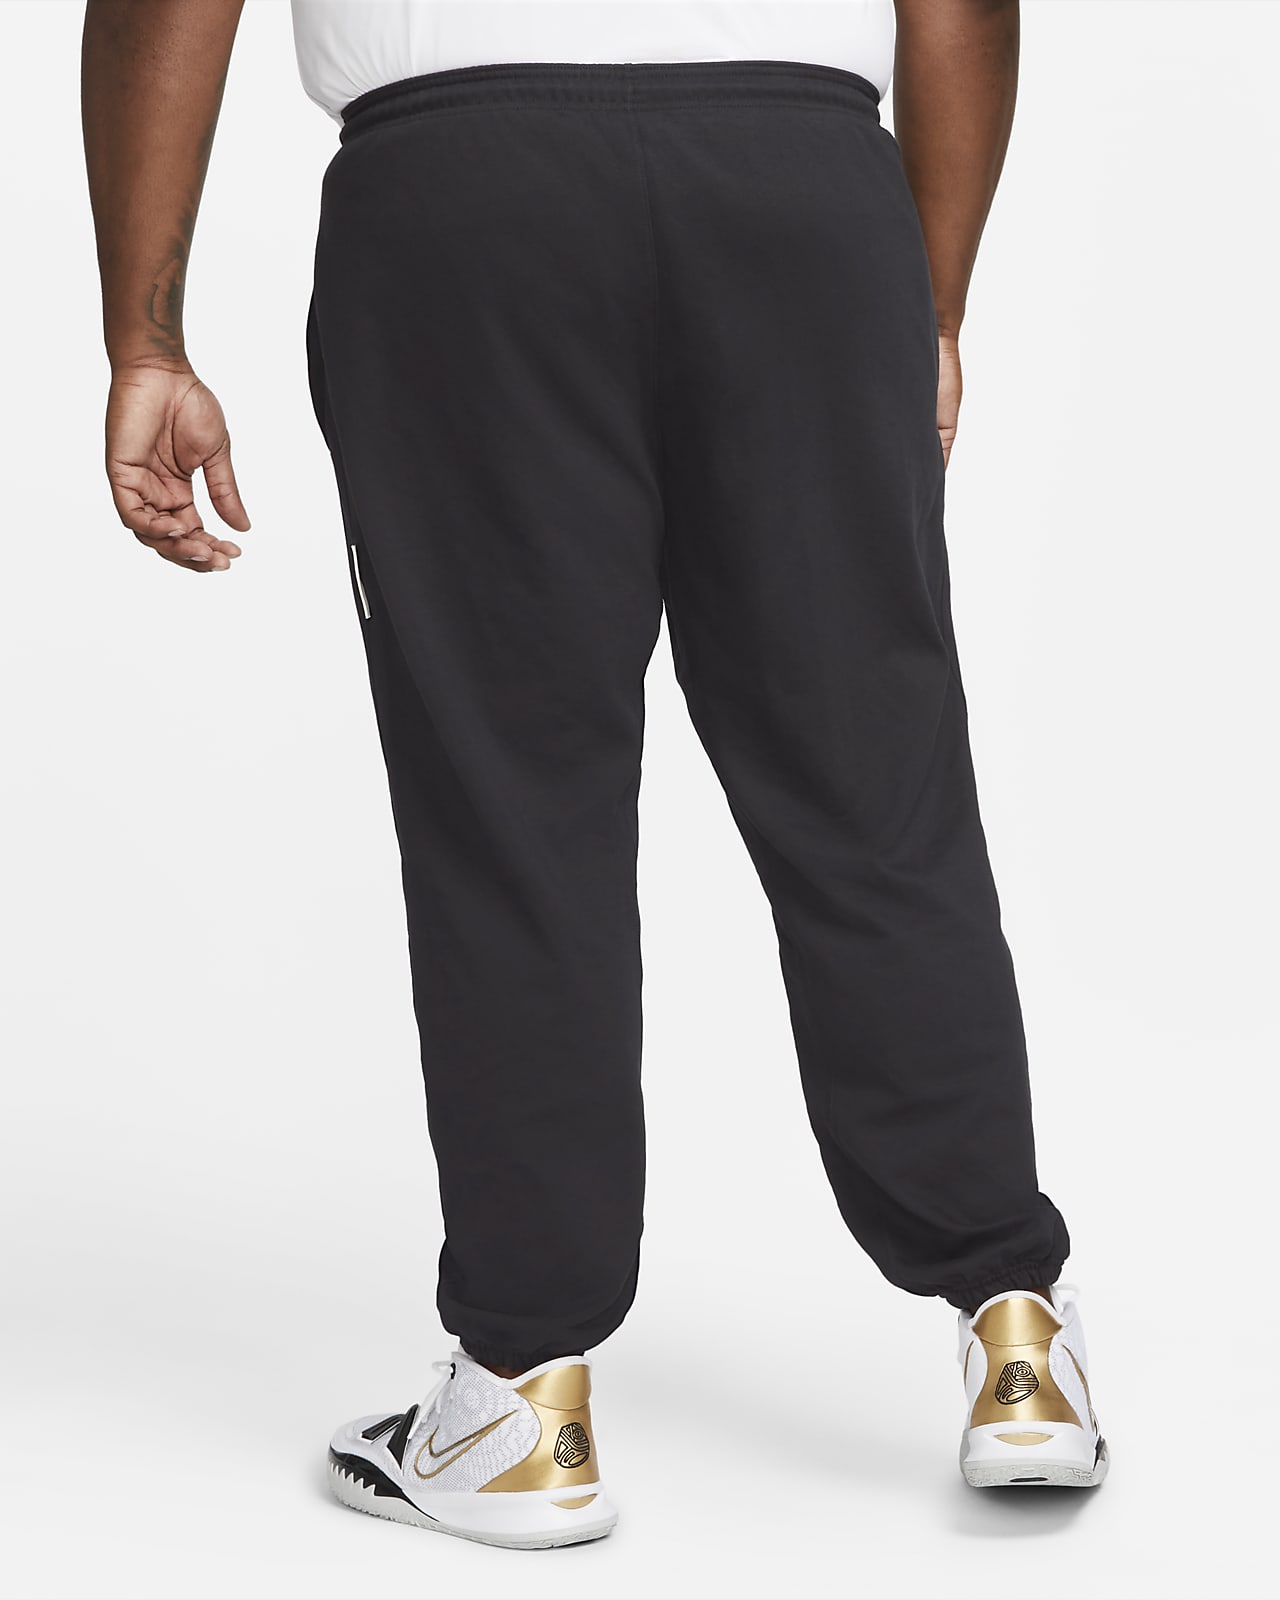 Nike Basketball pants in gray